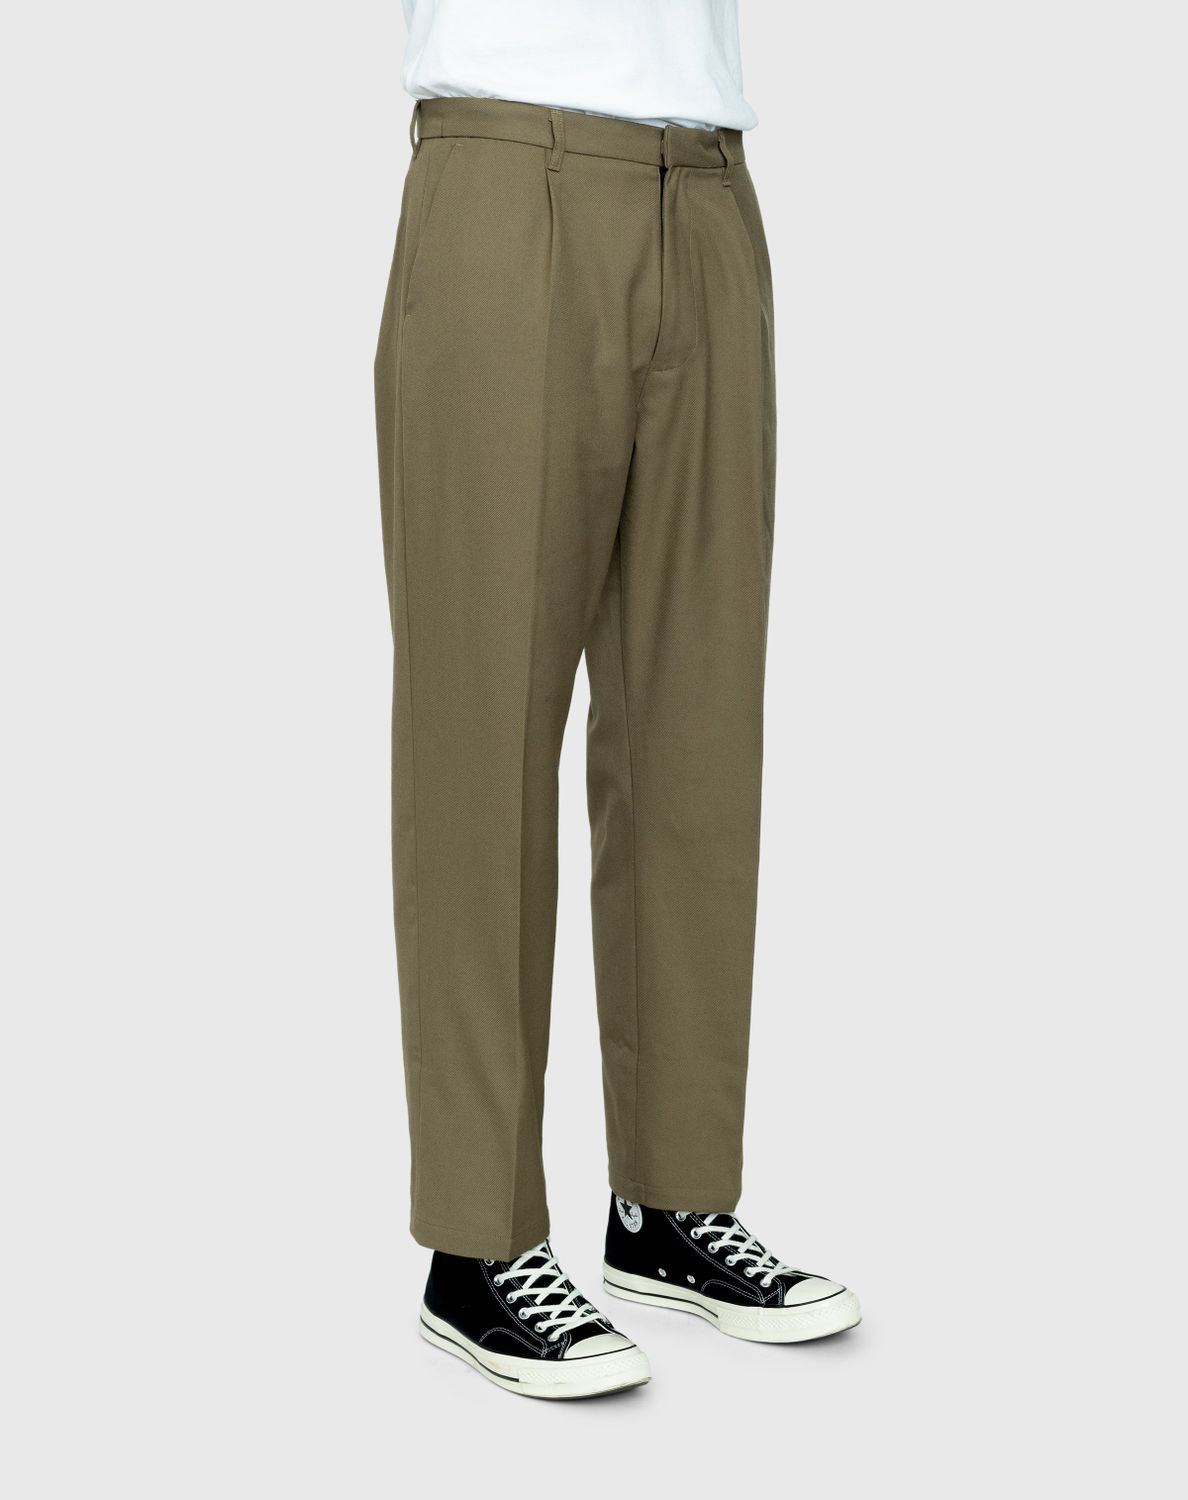 Highsnobiety – Heavy Wool Dress Pants Light Brown - Pants - Brown - Image 4